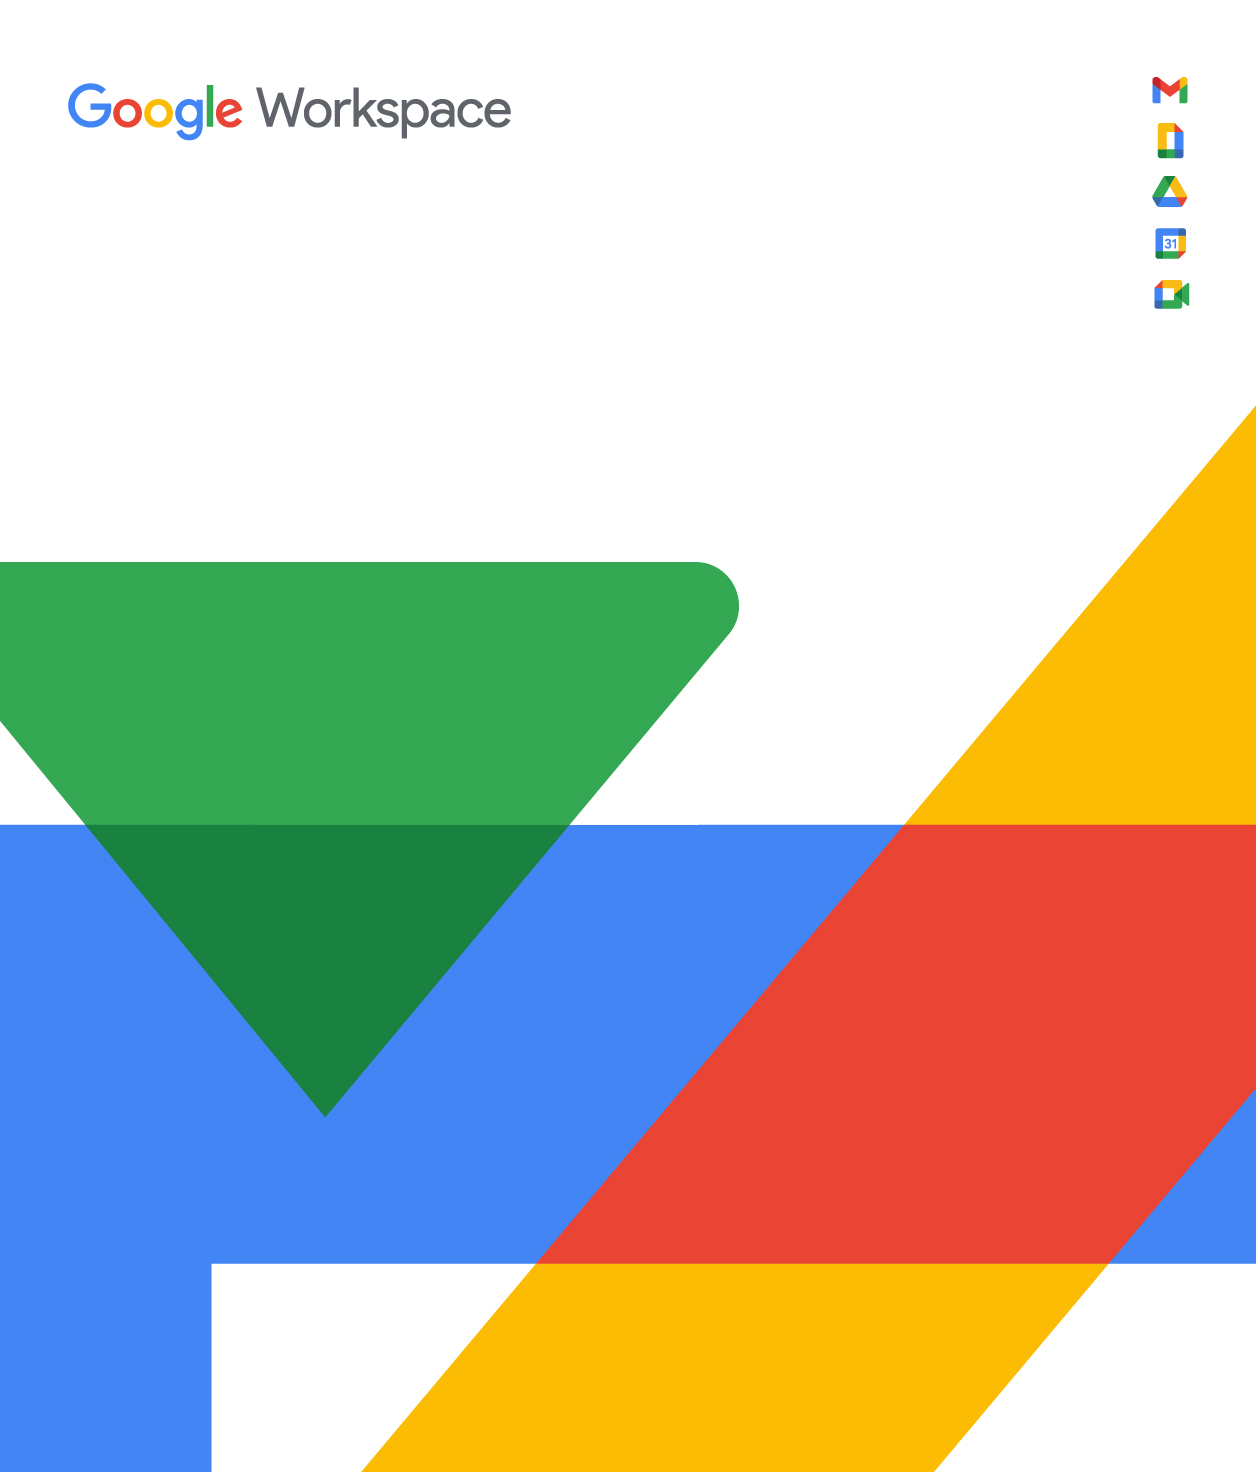 Protected: Google Workspace – Workspace1 – Duplicate